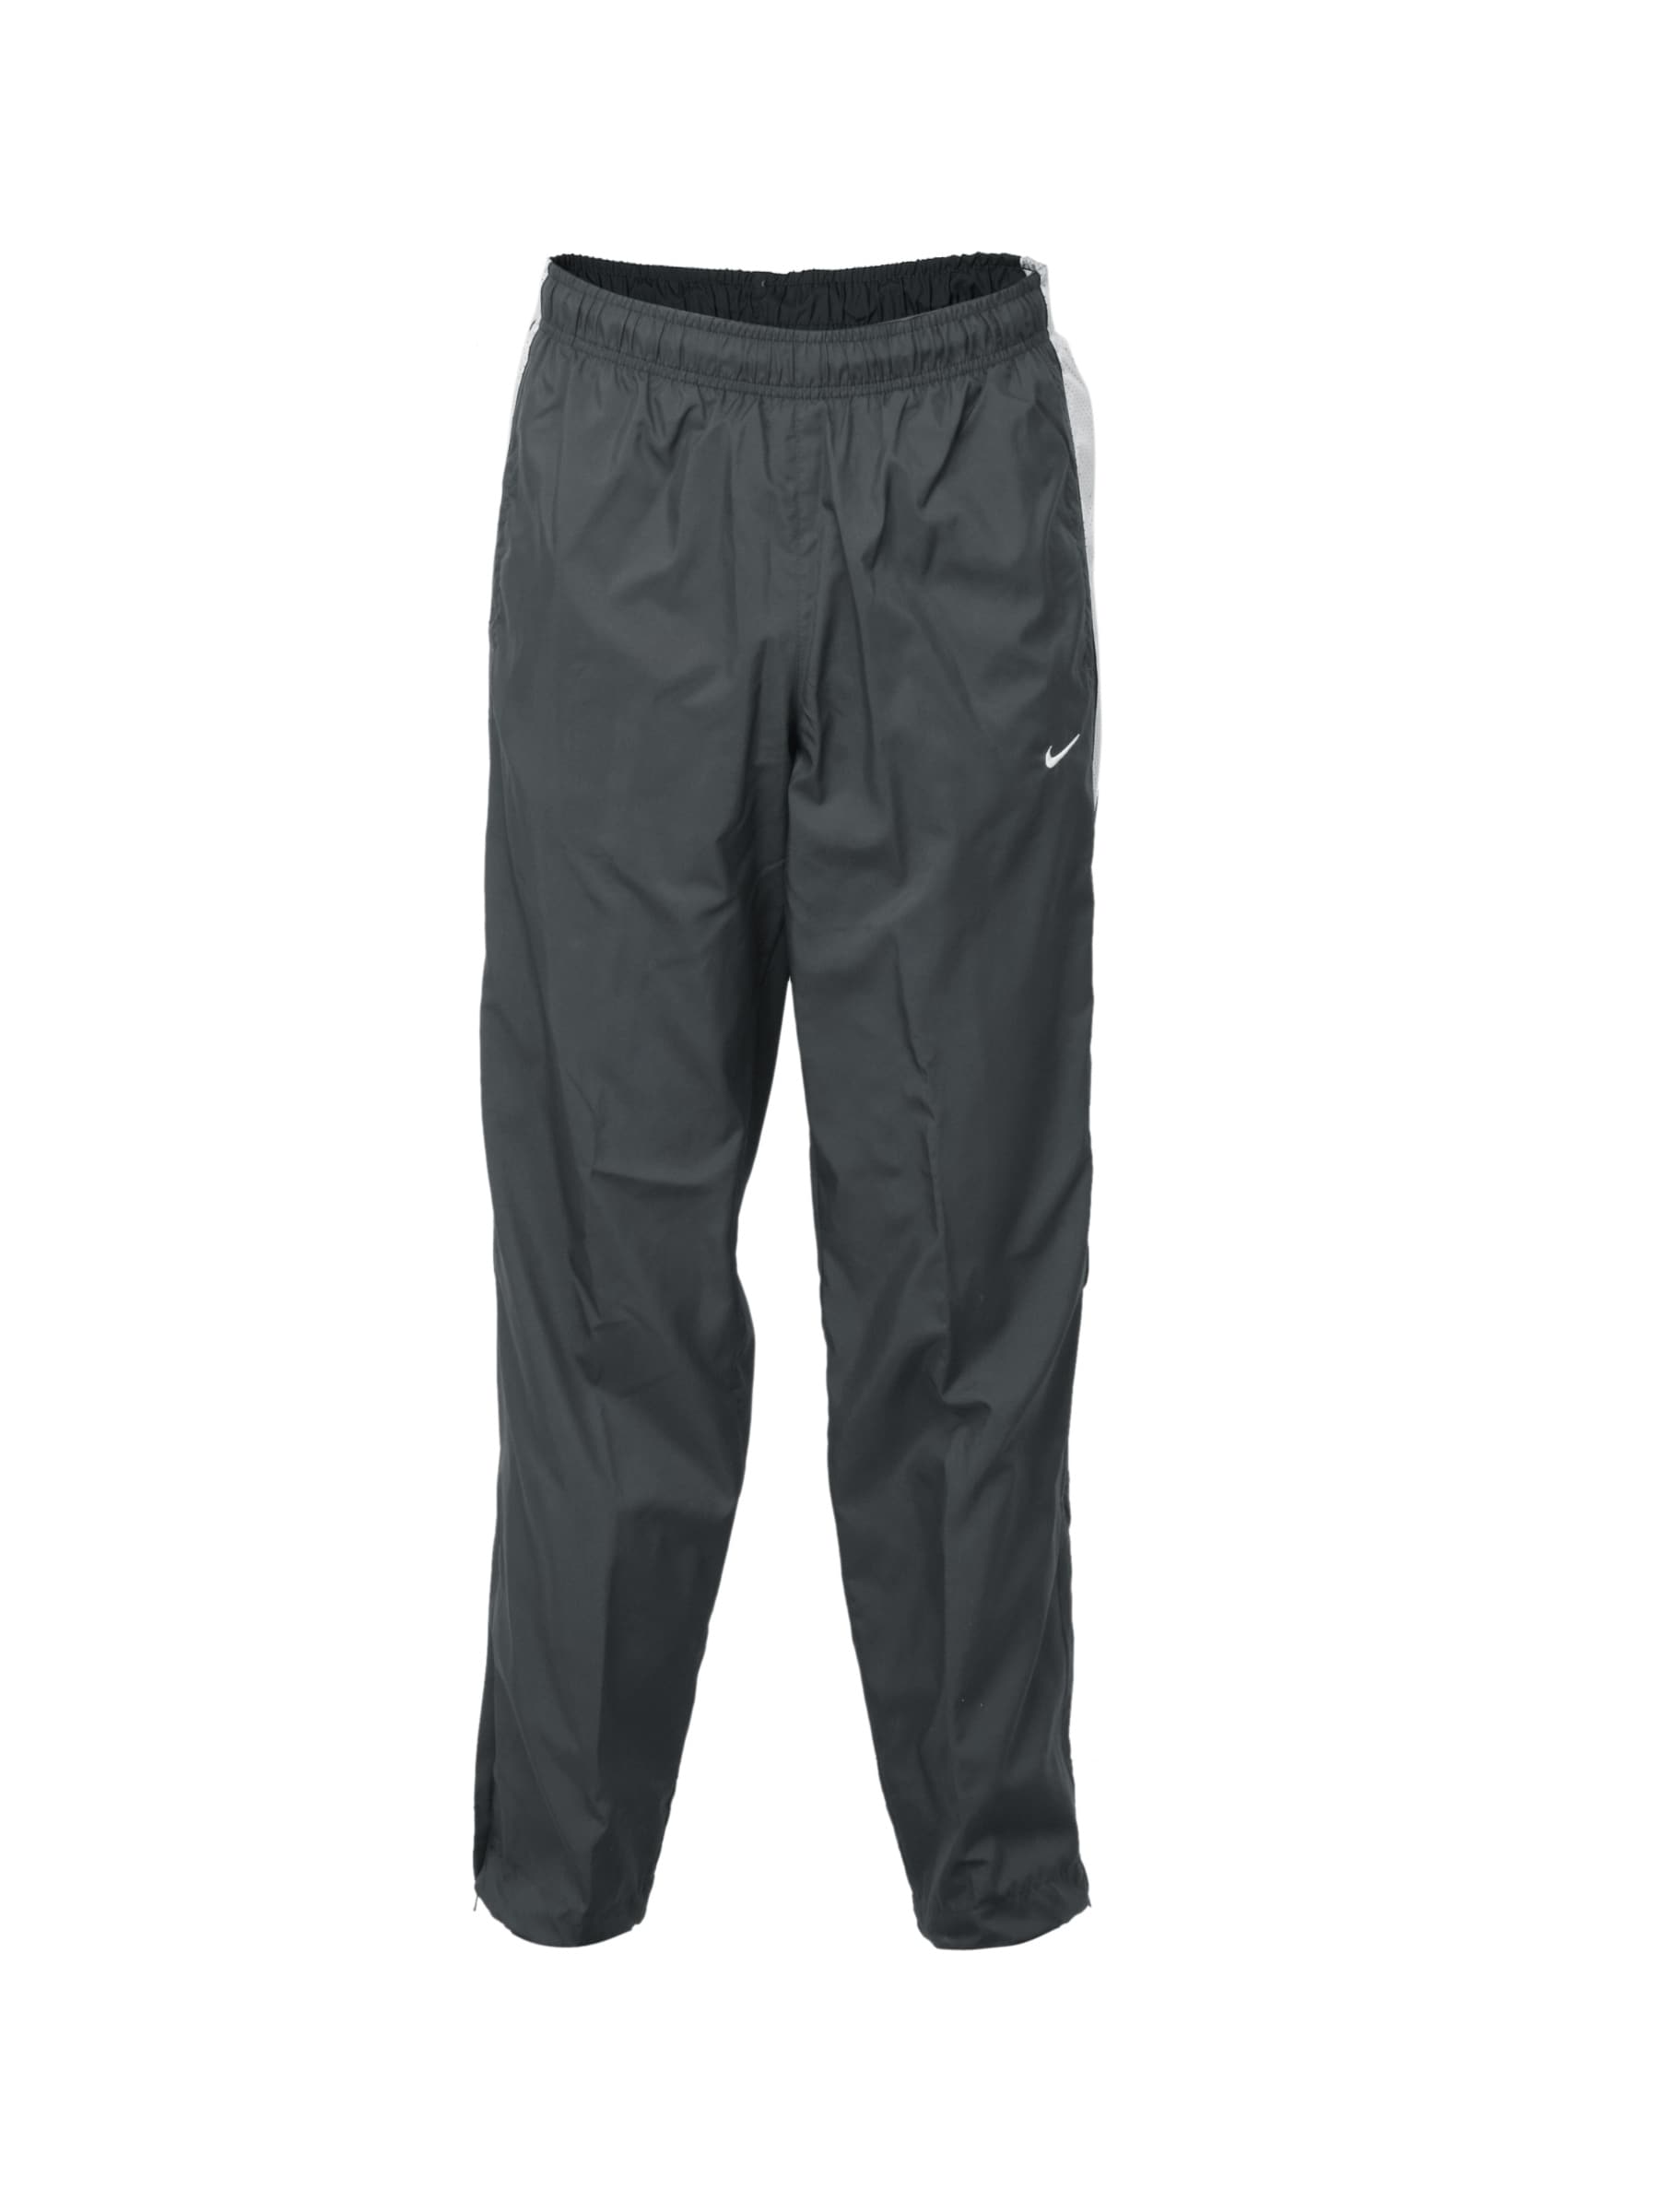 Nike Men Charcoal Track Pants